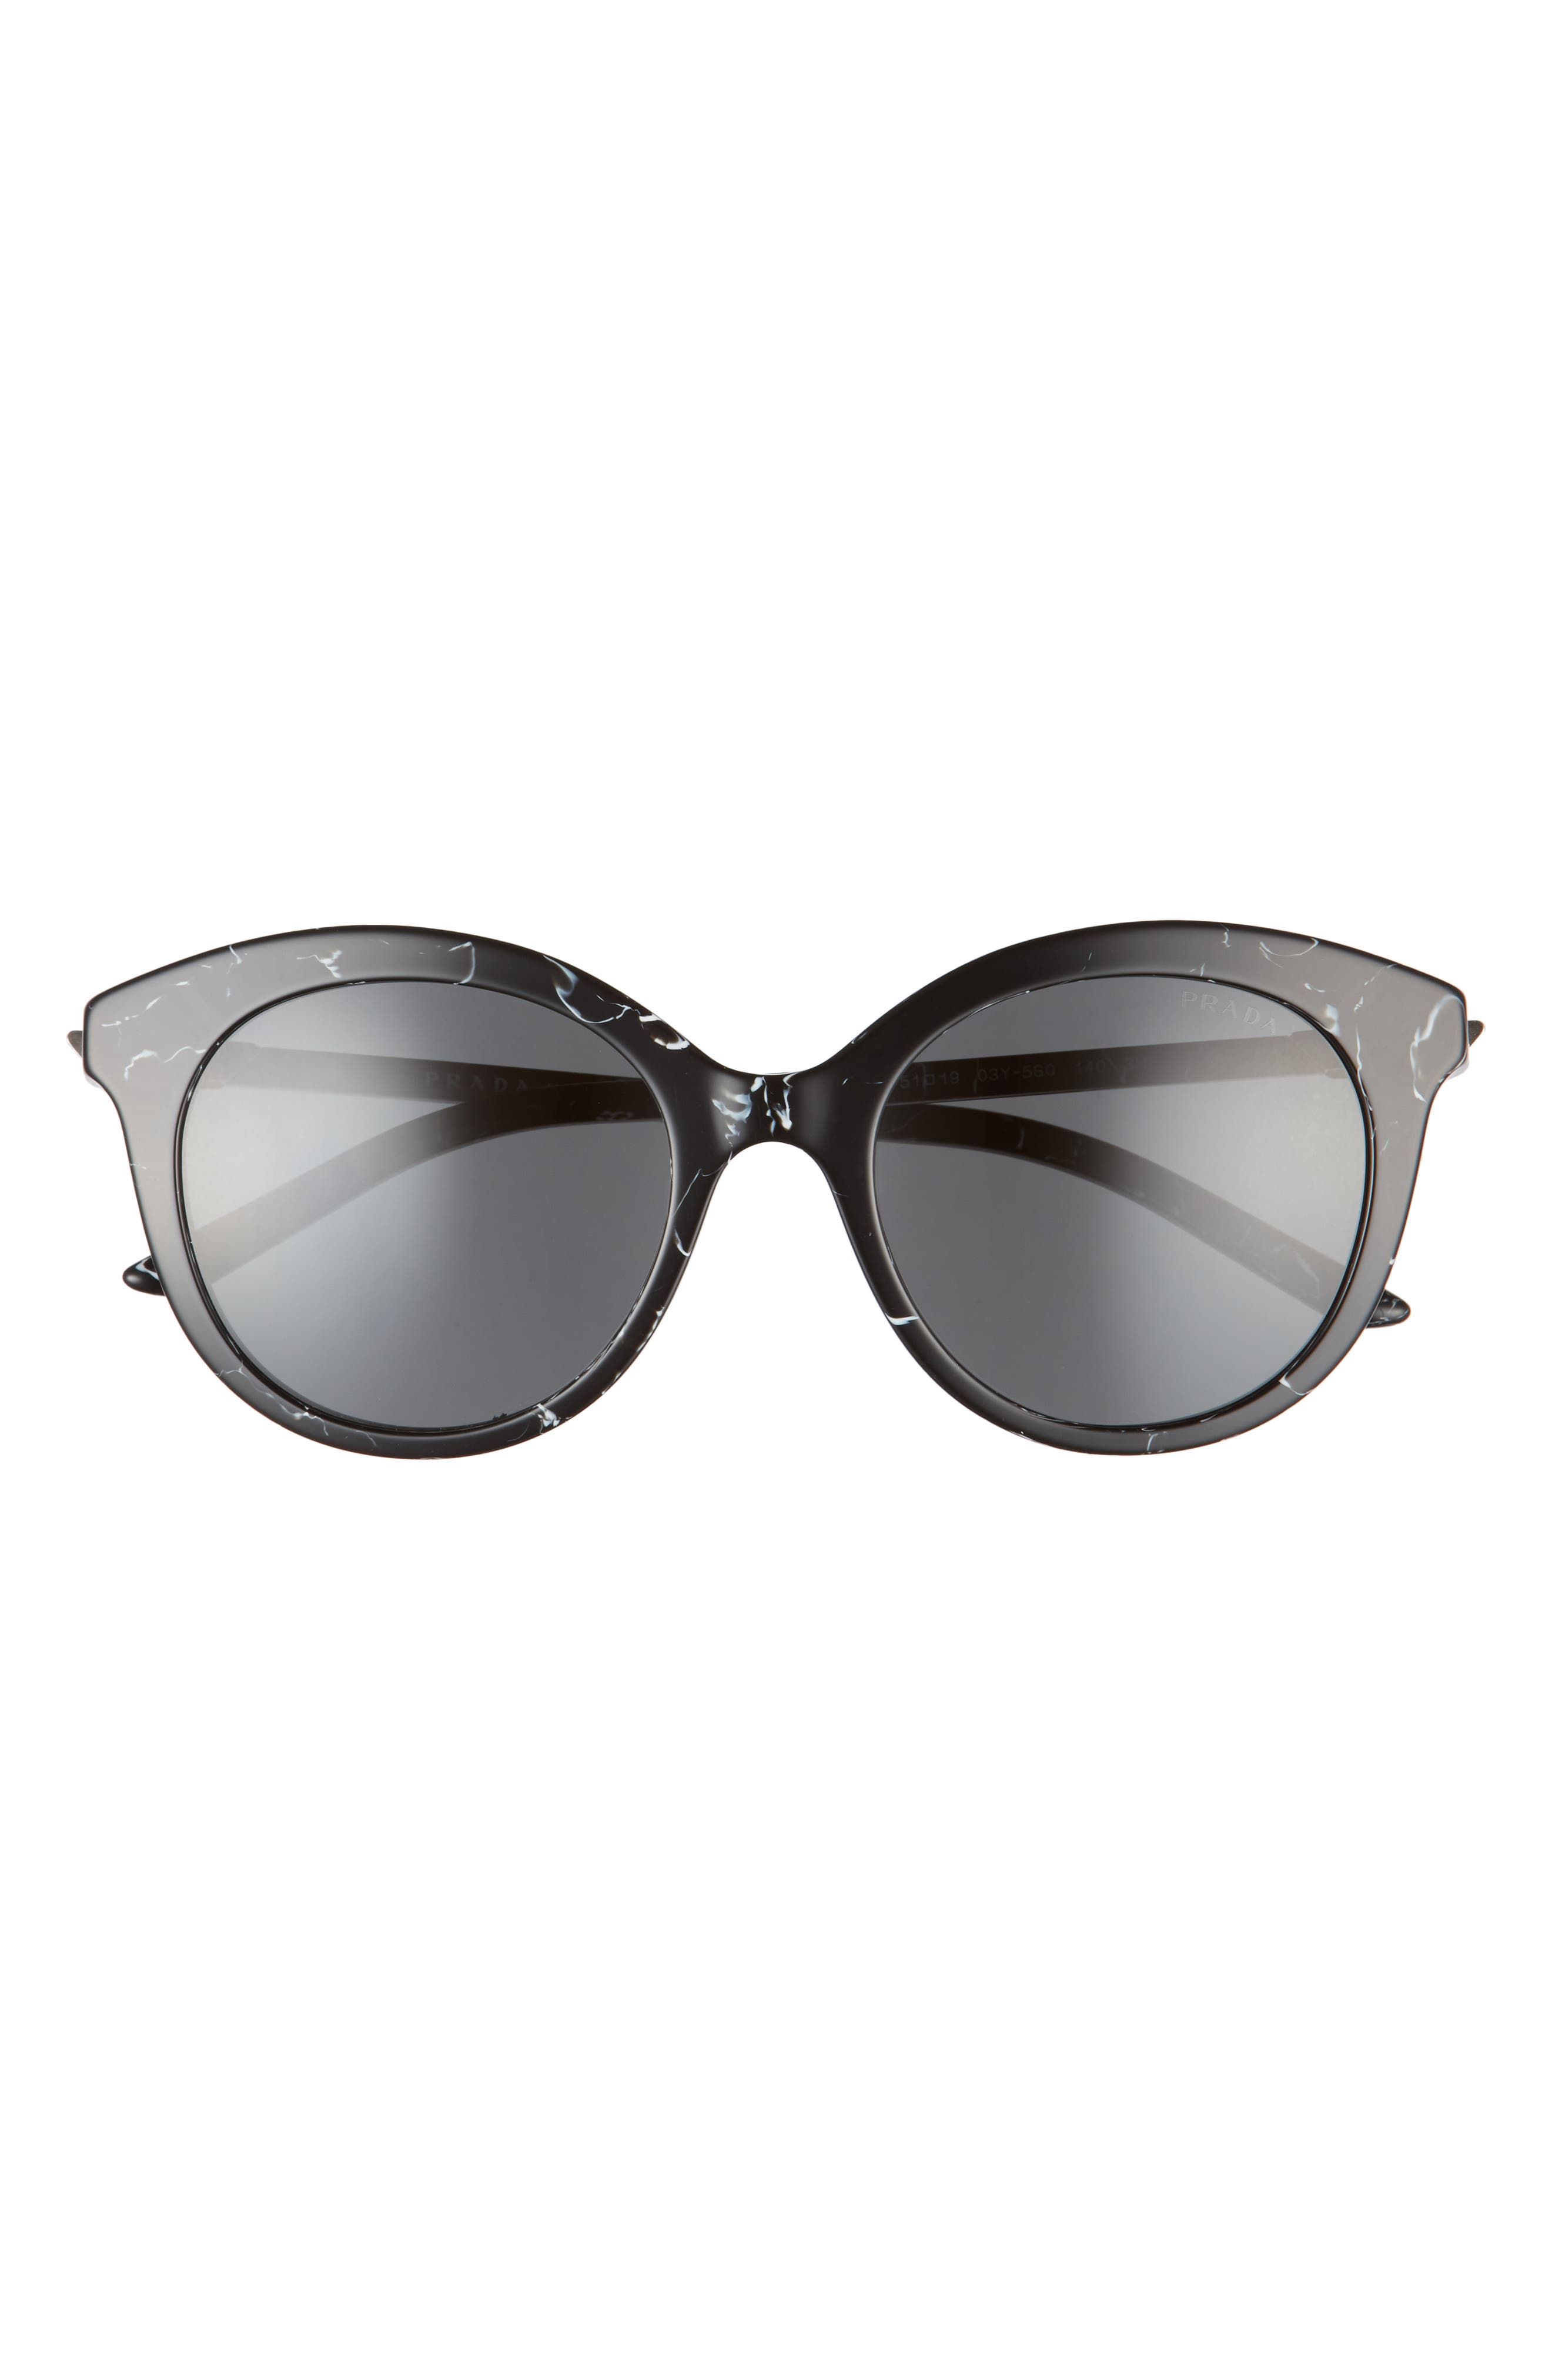 Prada 51mm Prescription Compatible Marbleized Round Sunglasses in Black Marble/Dark Grey at Nordstrom